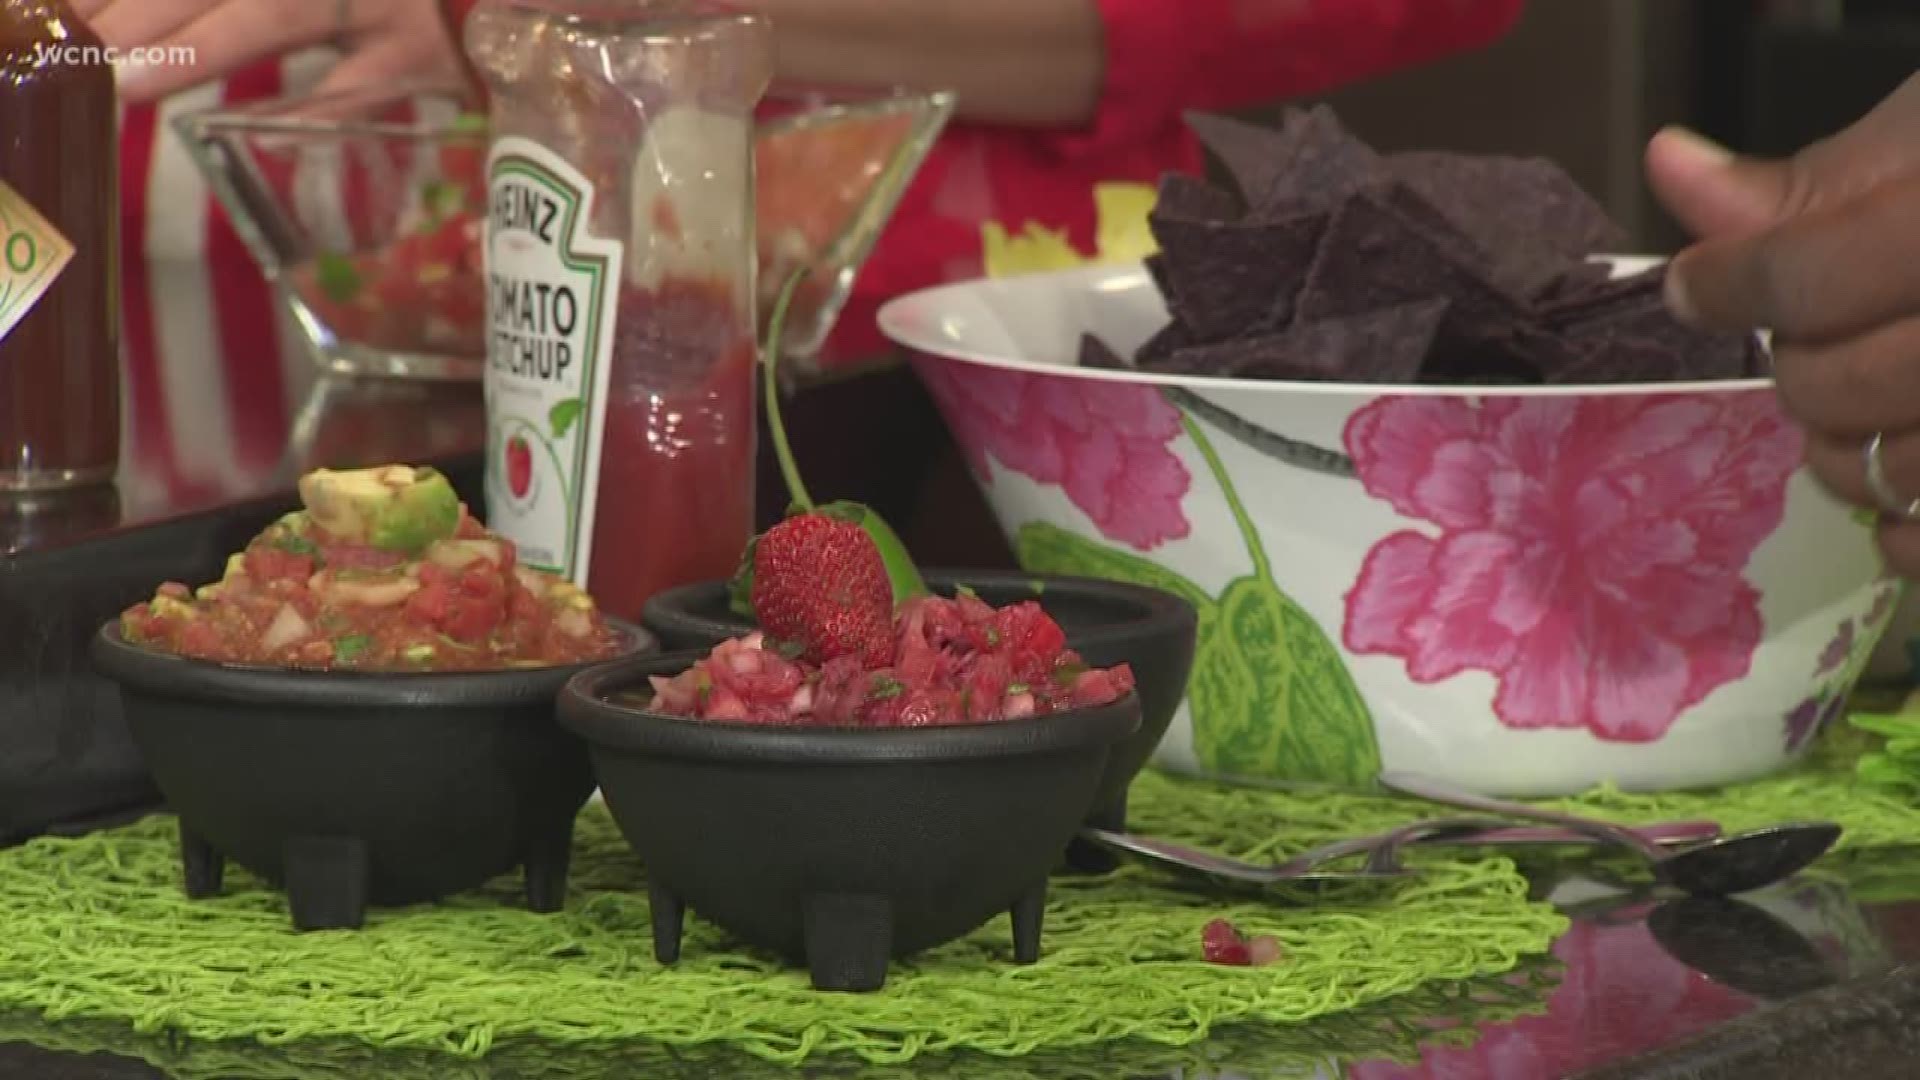 Jill Aker Ray has 3 recipes to get you ready for Cinco de Mayo